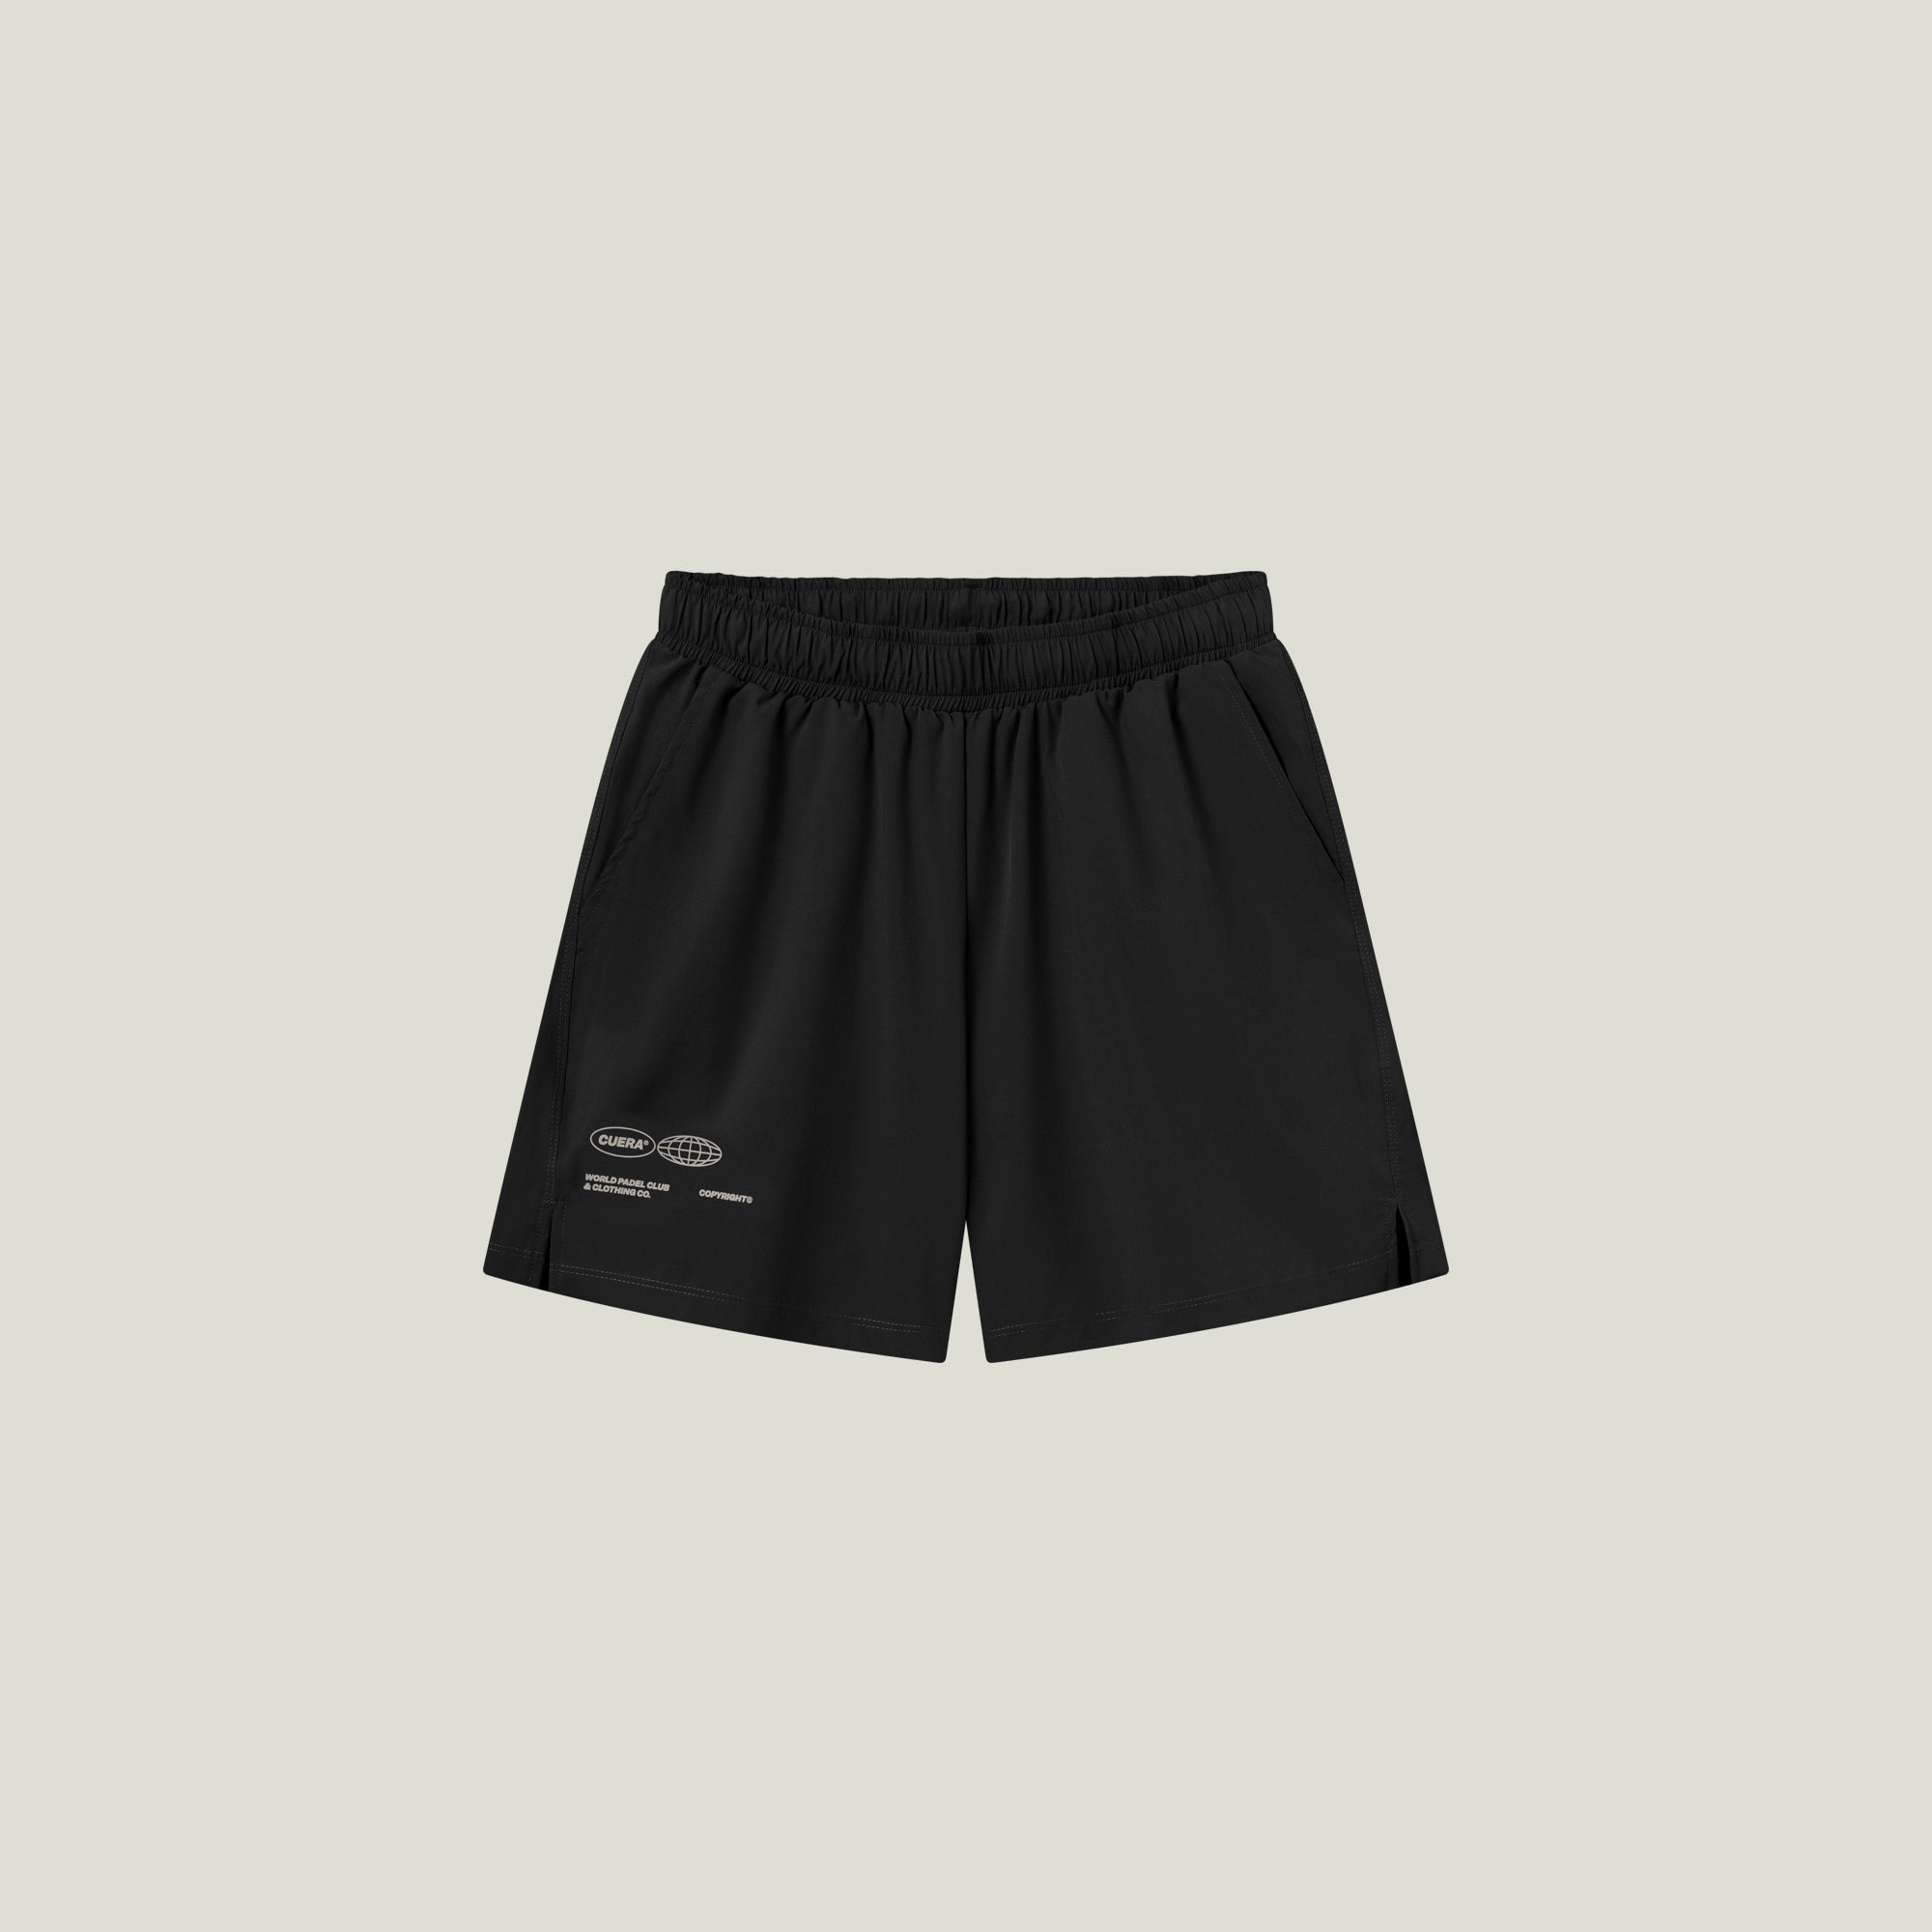 Oncourt Shorts Kit - Black, Army & Grey